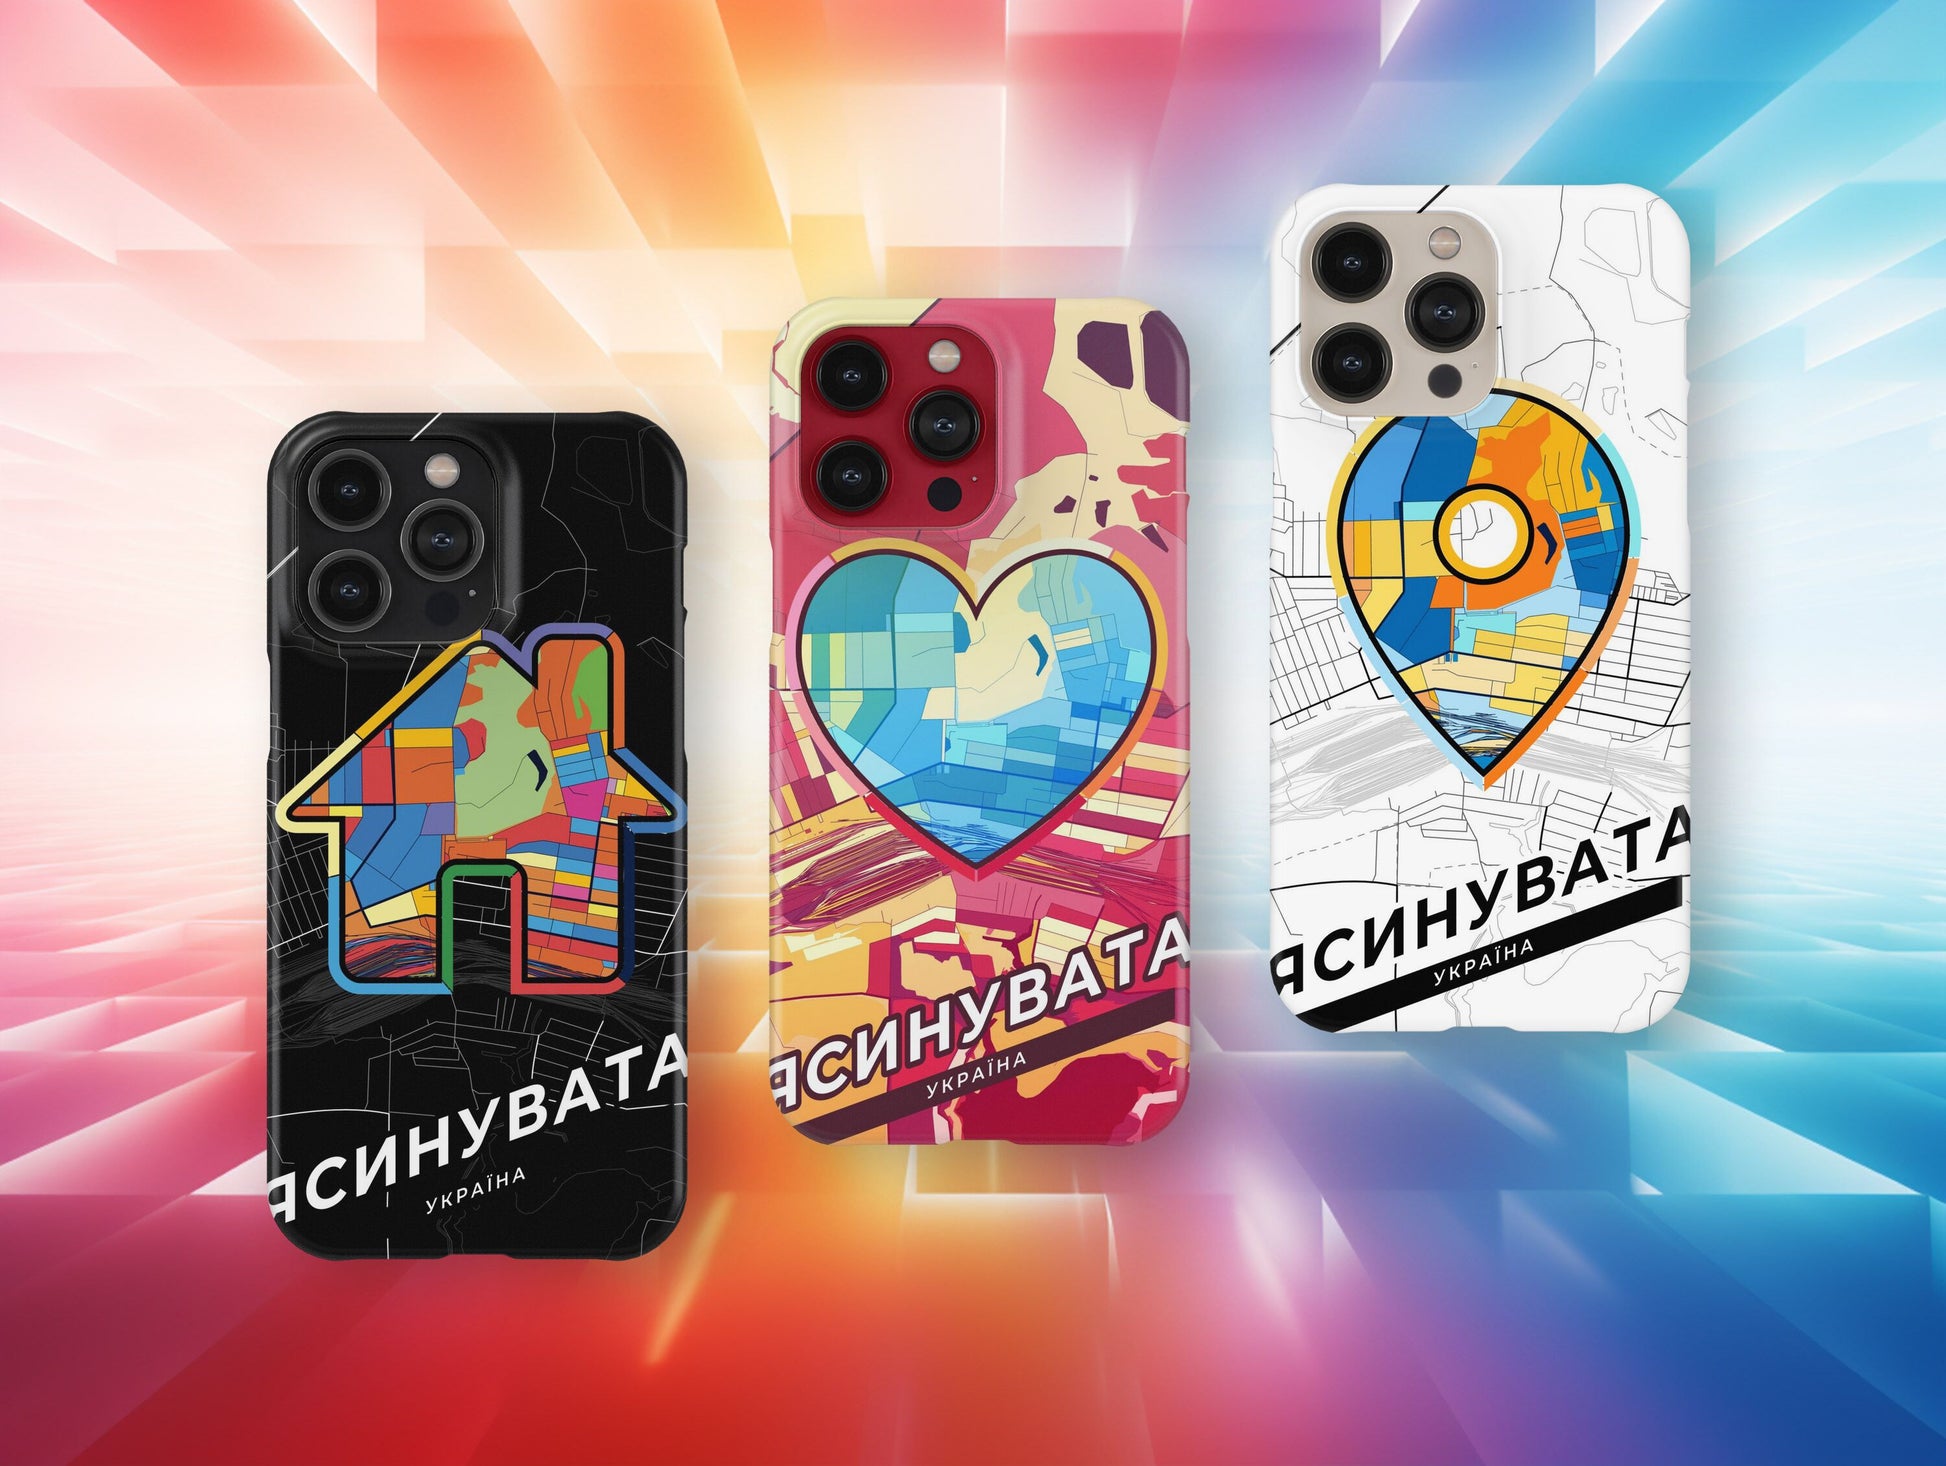 Yasynuvata Ukraine slim phone case with colorful icon